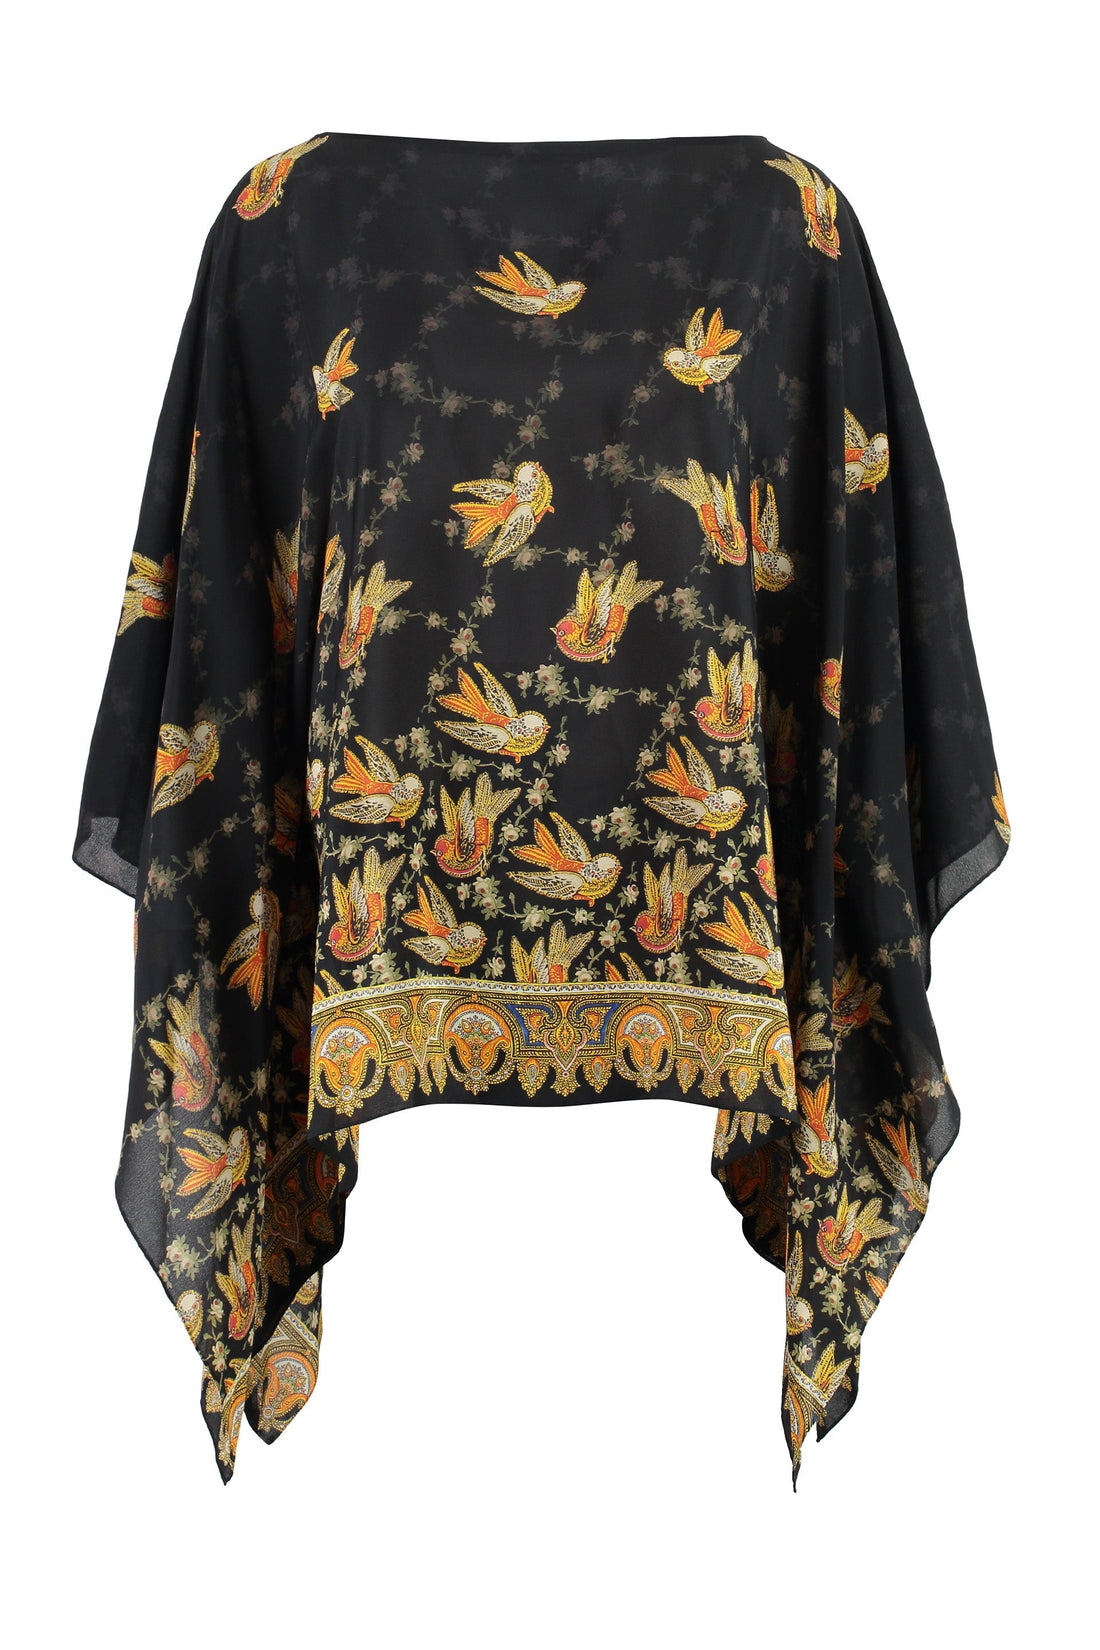 Etro-OUTLET-SALE-Printed silk blouse-ARCHIVIST